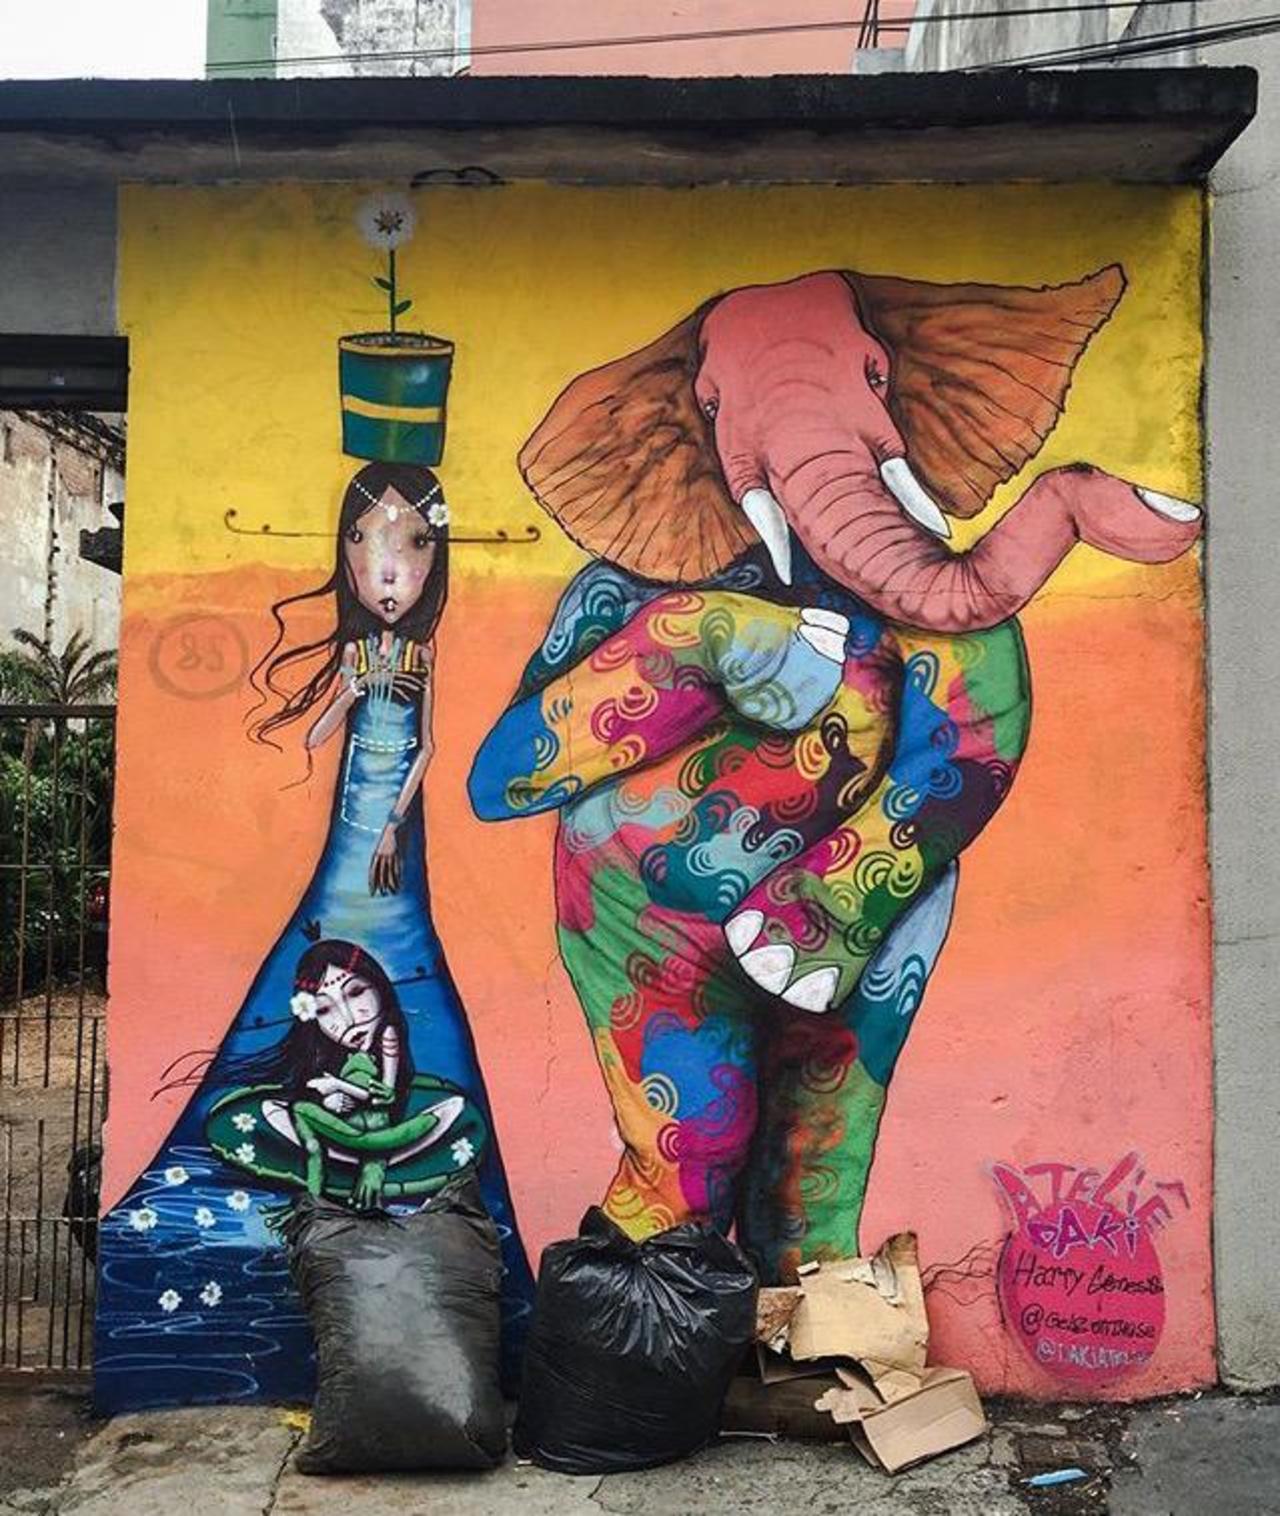 Street Art by Harry Geneis & Gelson in São Paulo #art #mural #graffiti #streetart http://t.co/SlLbhuMZfD … … … http://twitter.com/charlesjackso14/status/648021493272707072